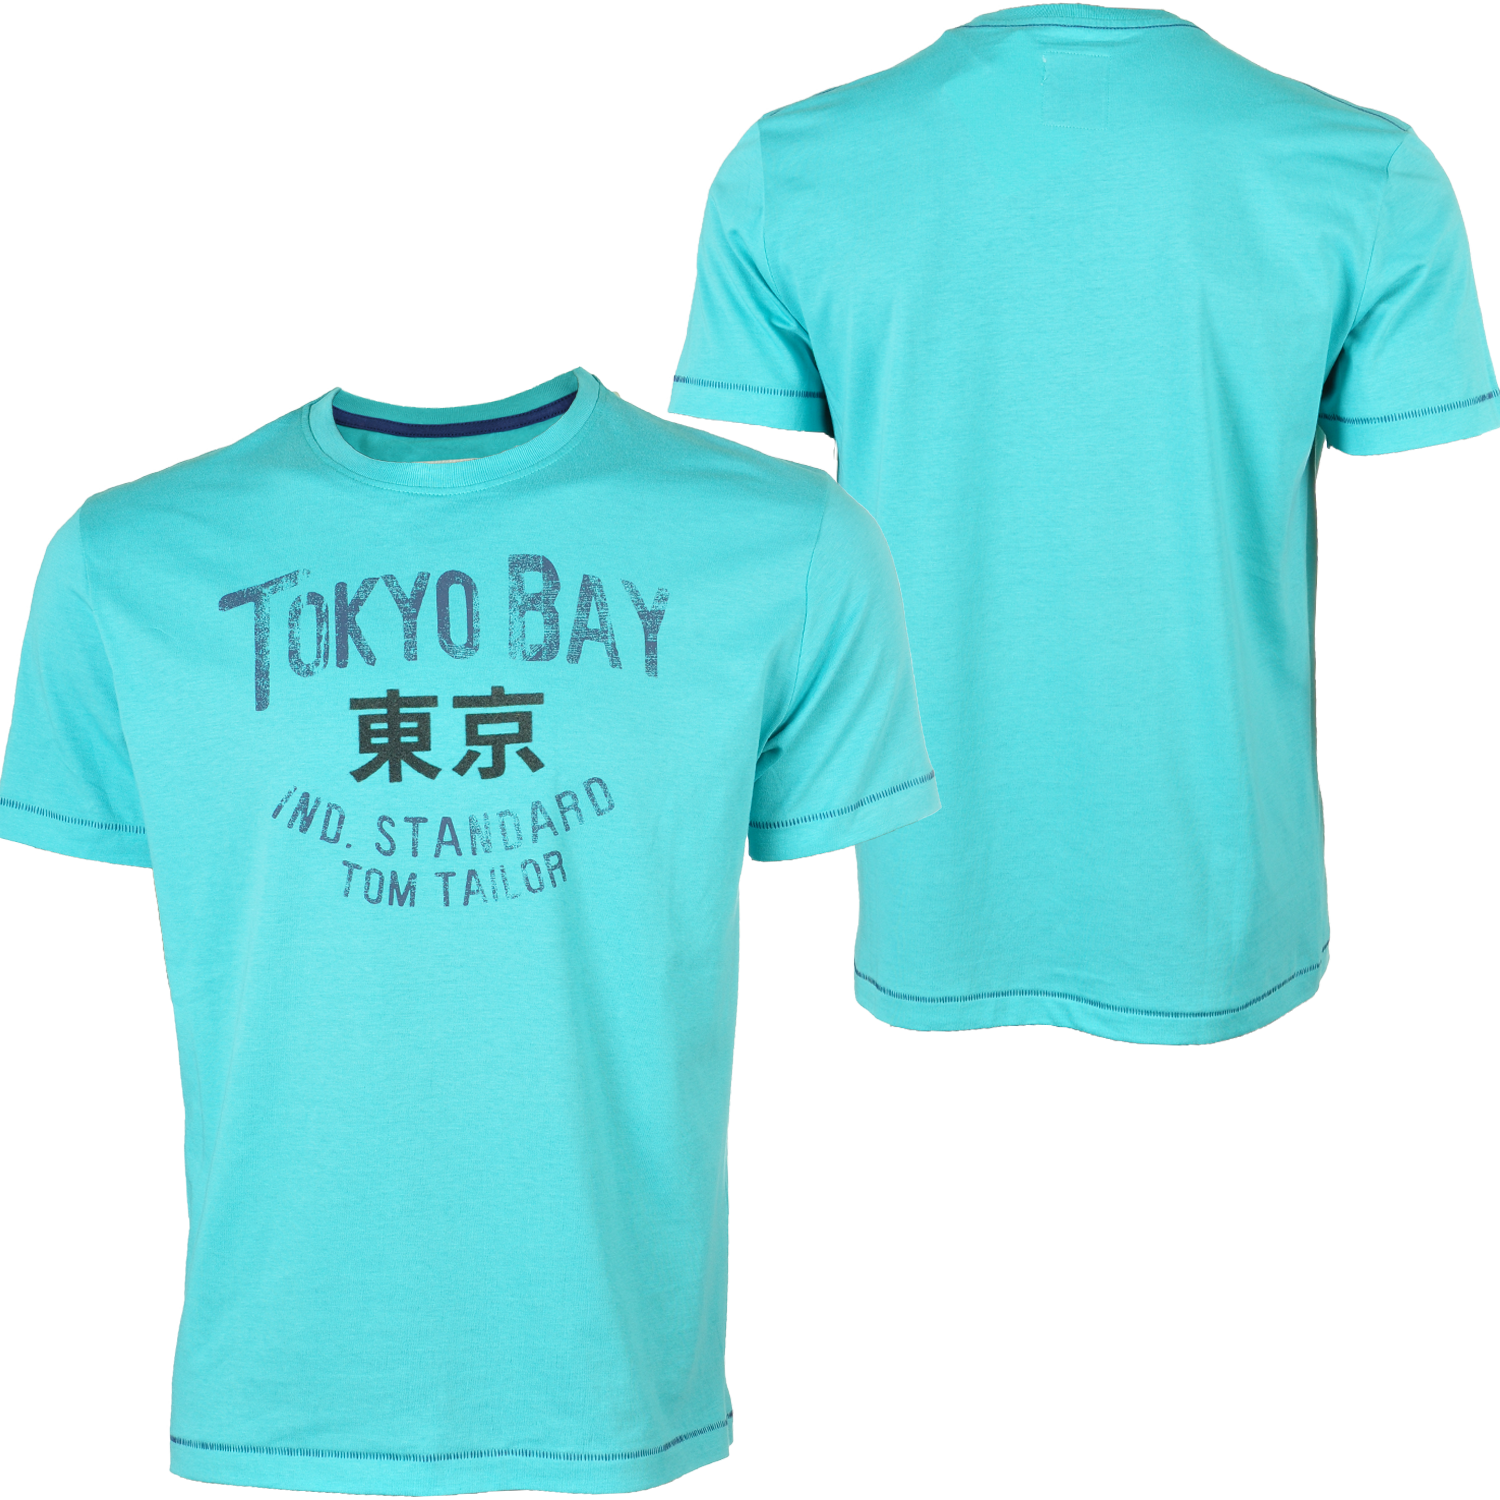 Foto Tom Tailor Tokyo Bay T-shirt Turquesa foto 186374